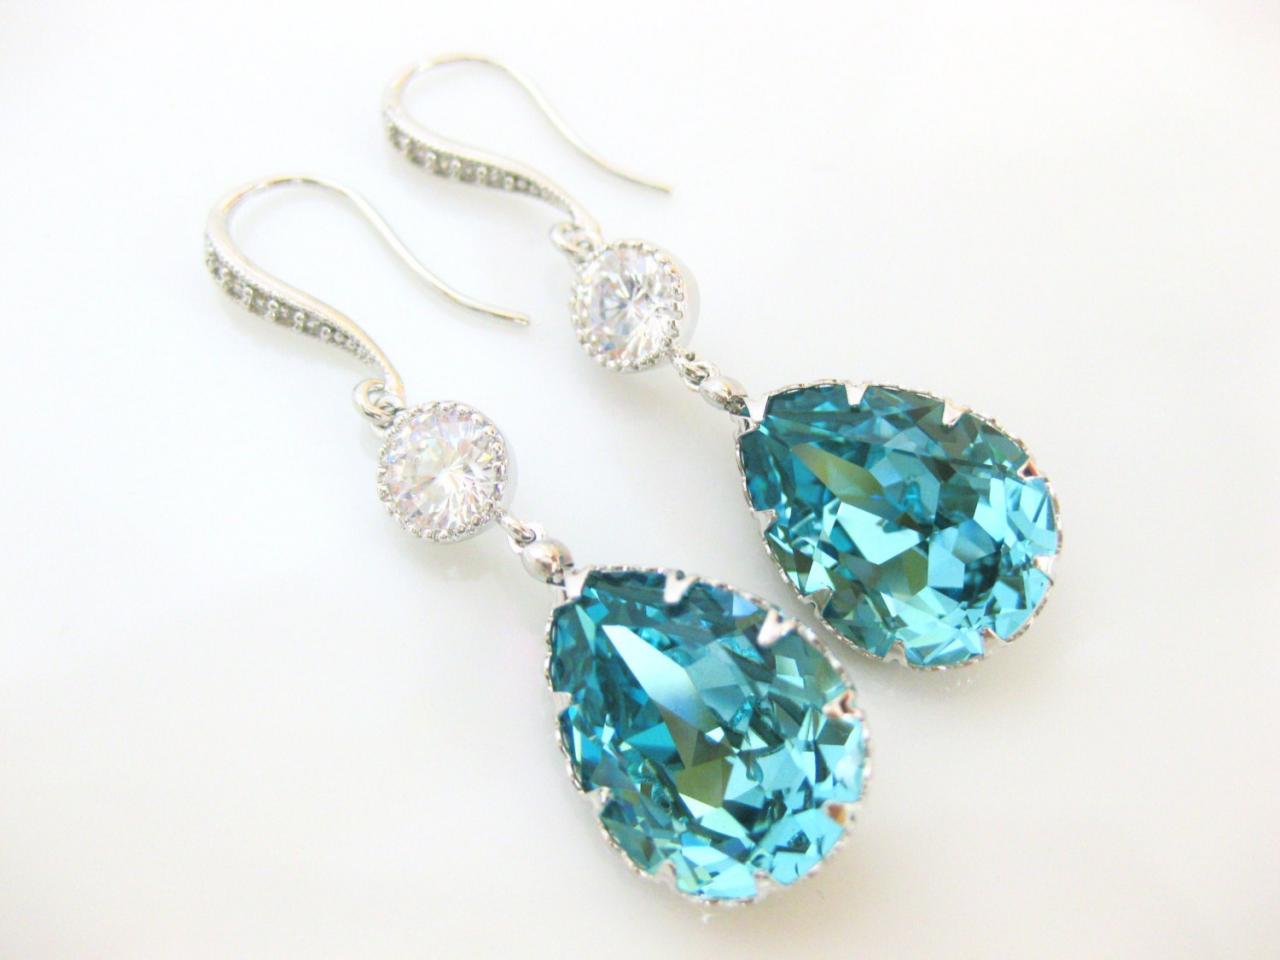 Teal Blue Earrings Swarovski Crystal Light Turquoise Earrings Blue Earrings Wedding Earrings Bridal Earrings Bridesmaid Gift (e134)